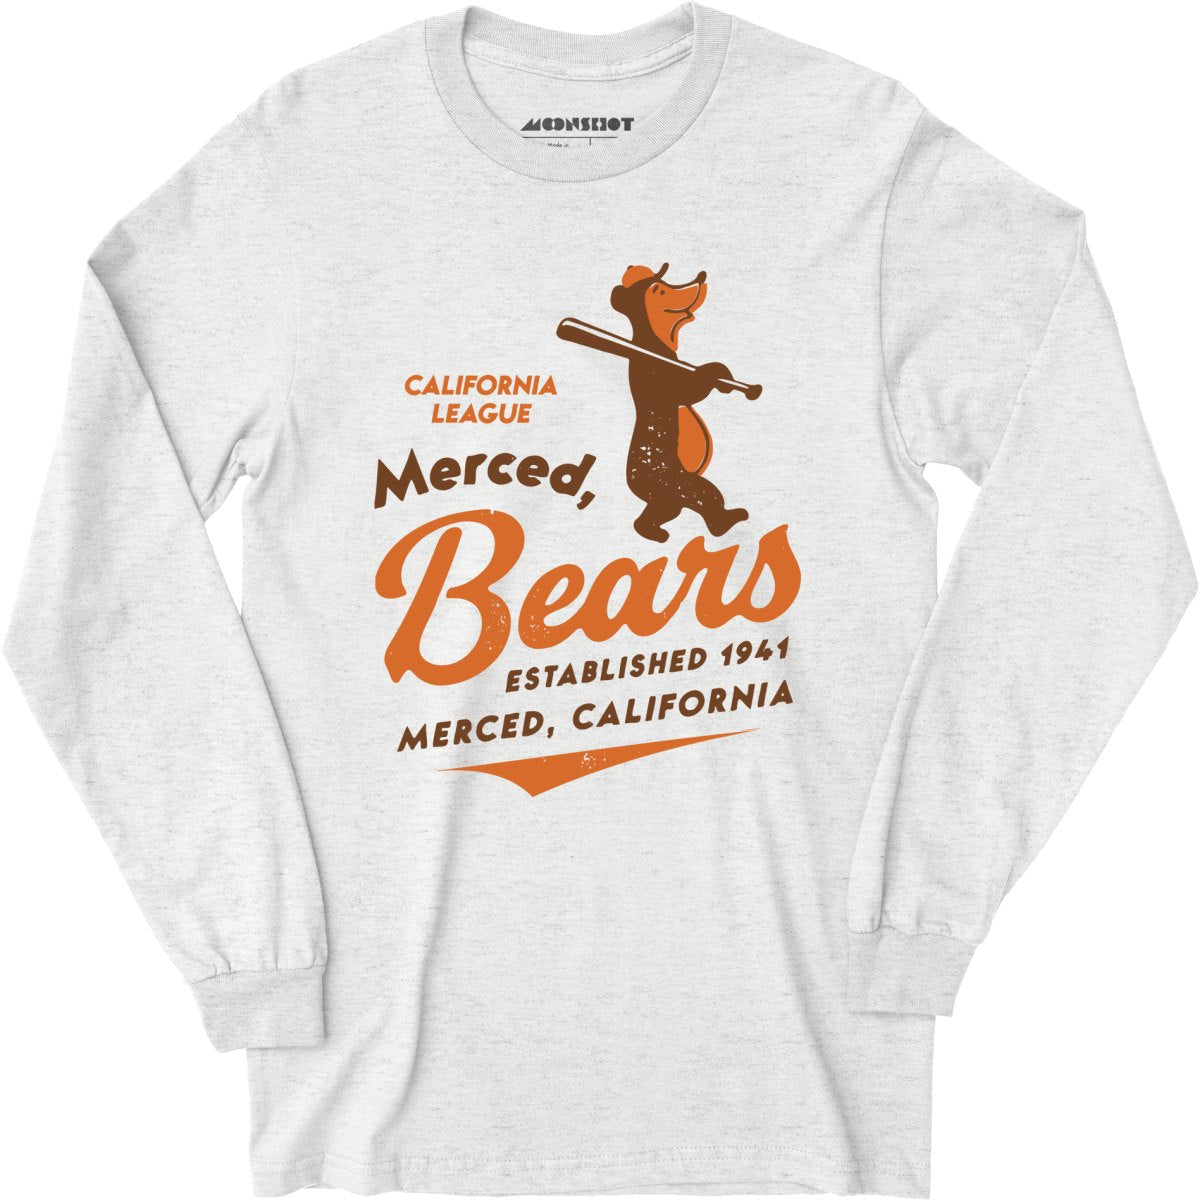 Merced Bears - California - Vintage Defunct Baseball Teams - Long Sleeve T-Shirt